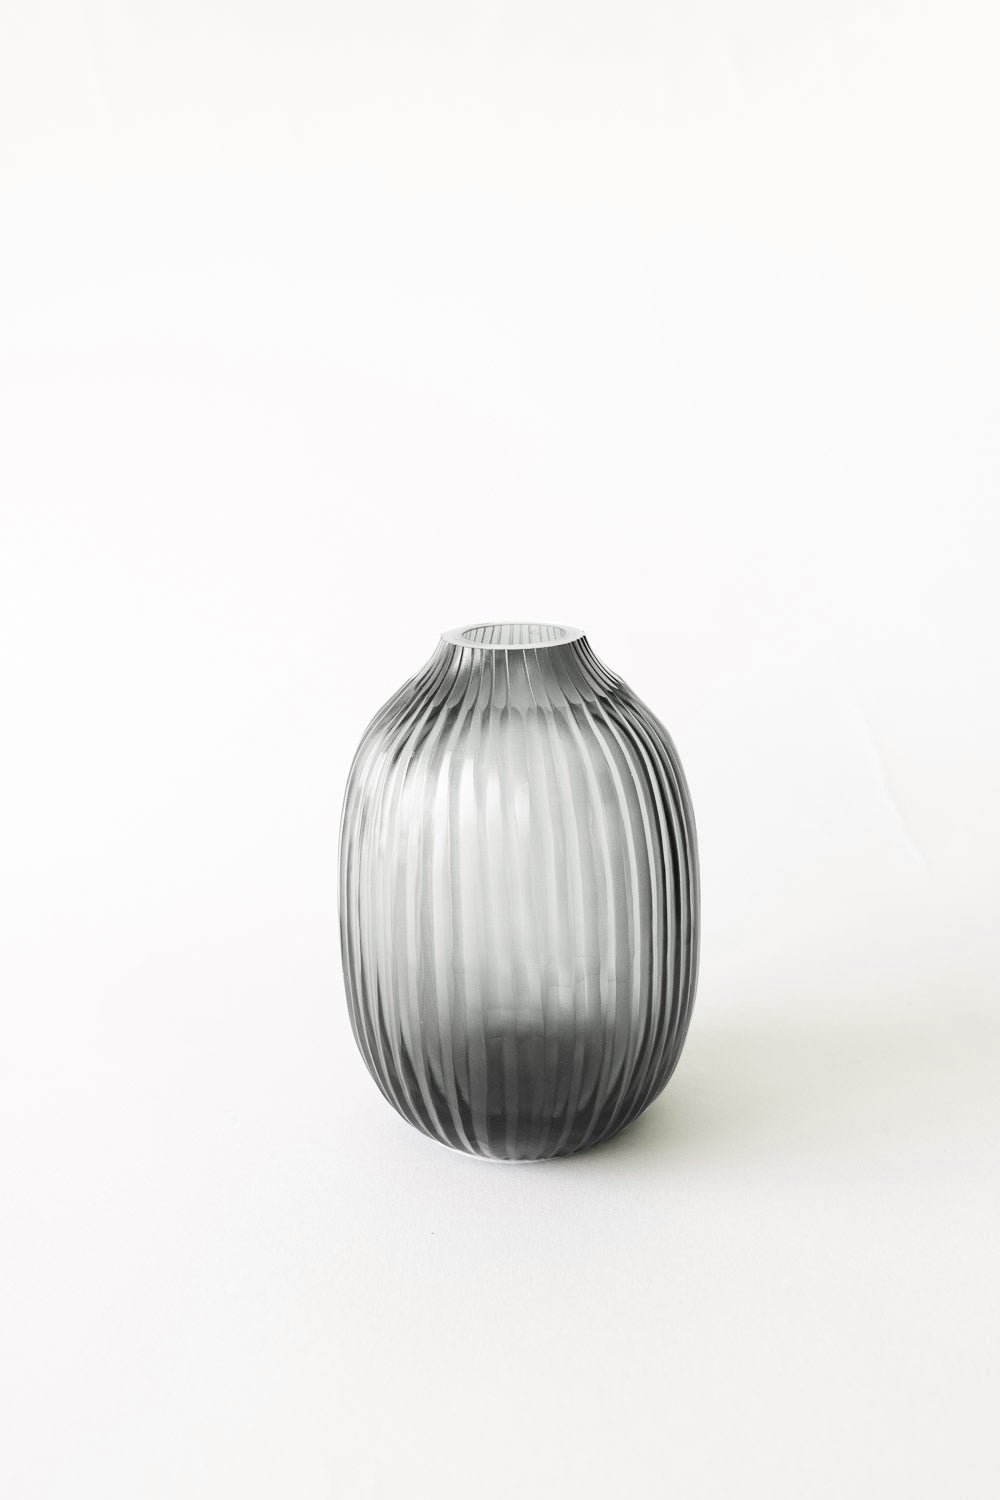 Brian Tunks Cut Glass Vase, Pod.